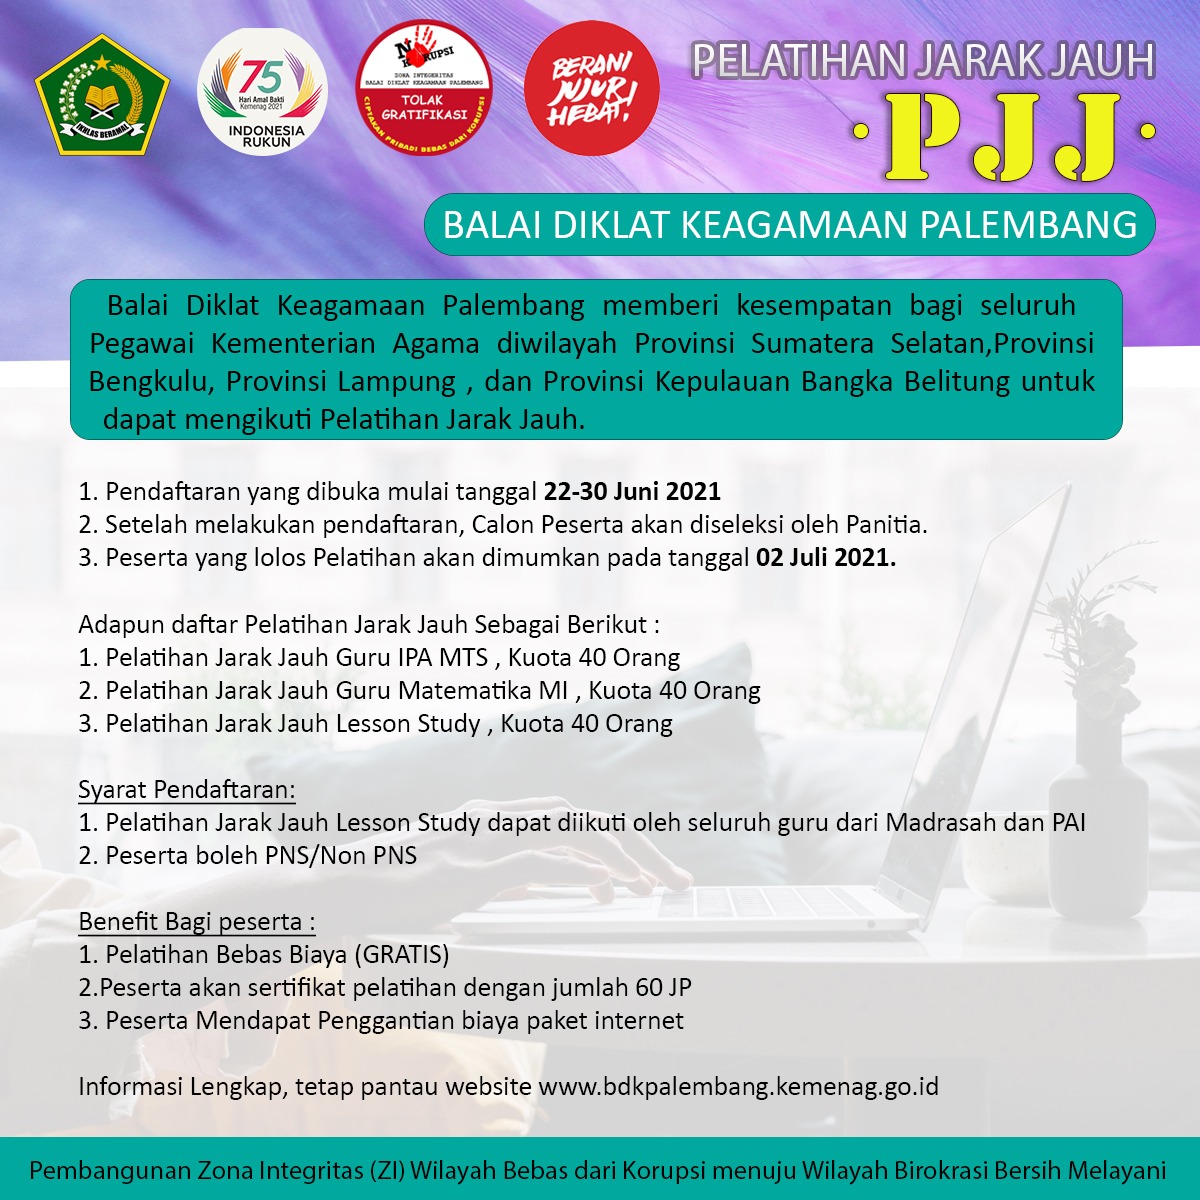 Balai Diklat Keagamaan Palembang Gelar Pelatihan Jarak Jauh 06-12 Juli 2021